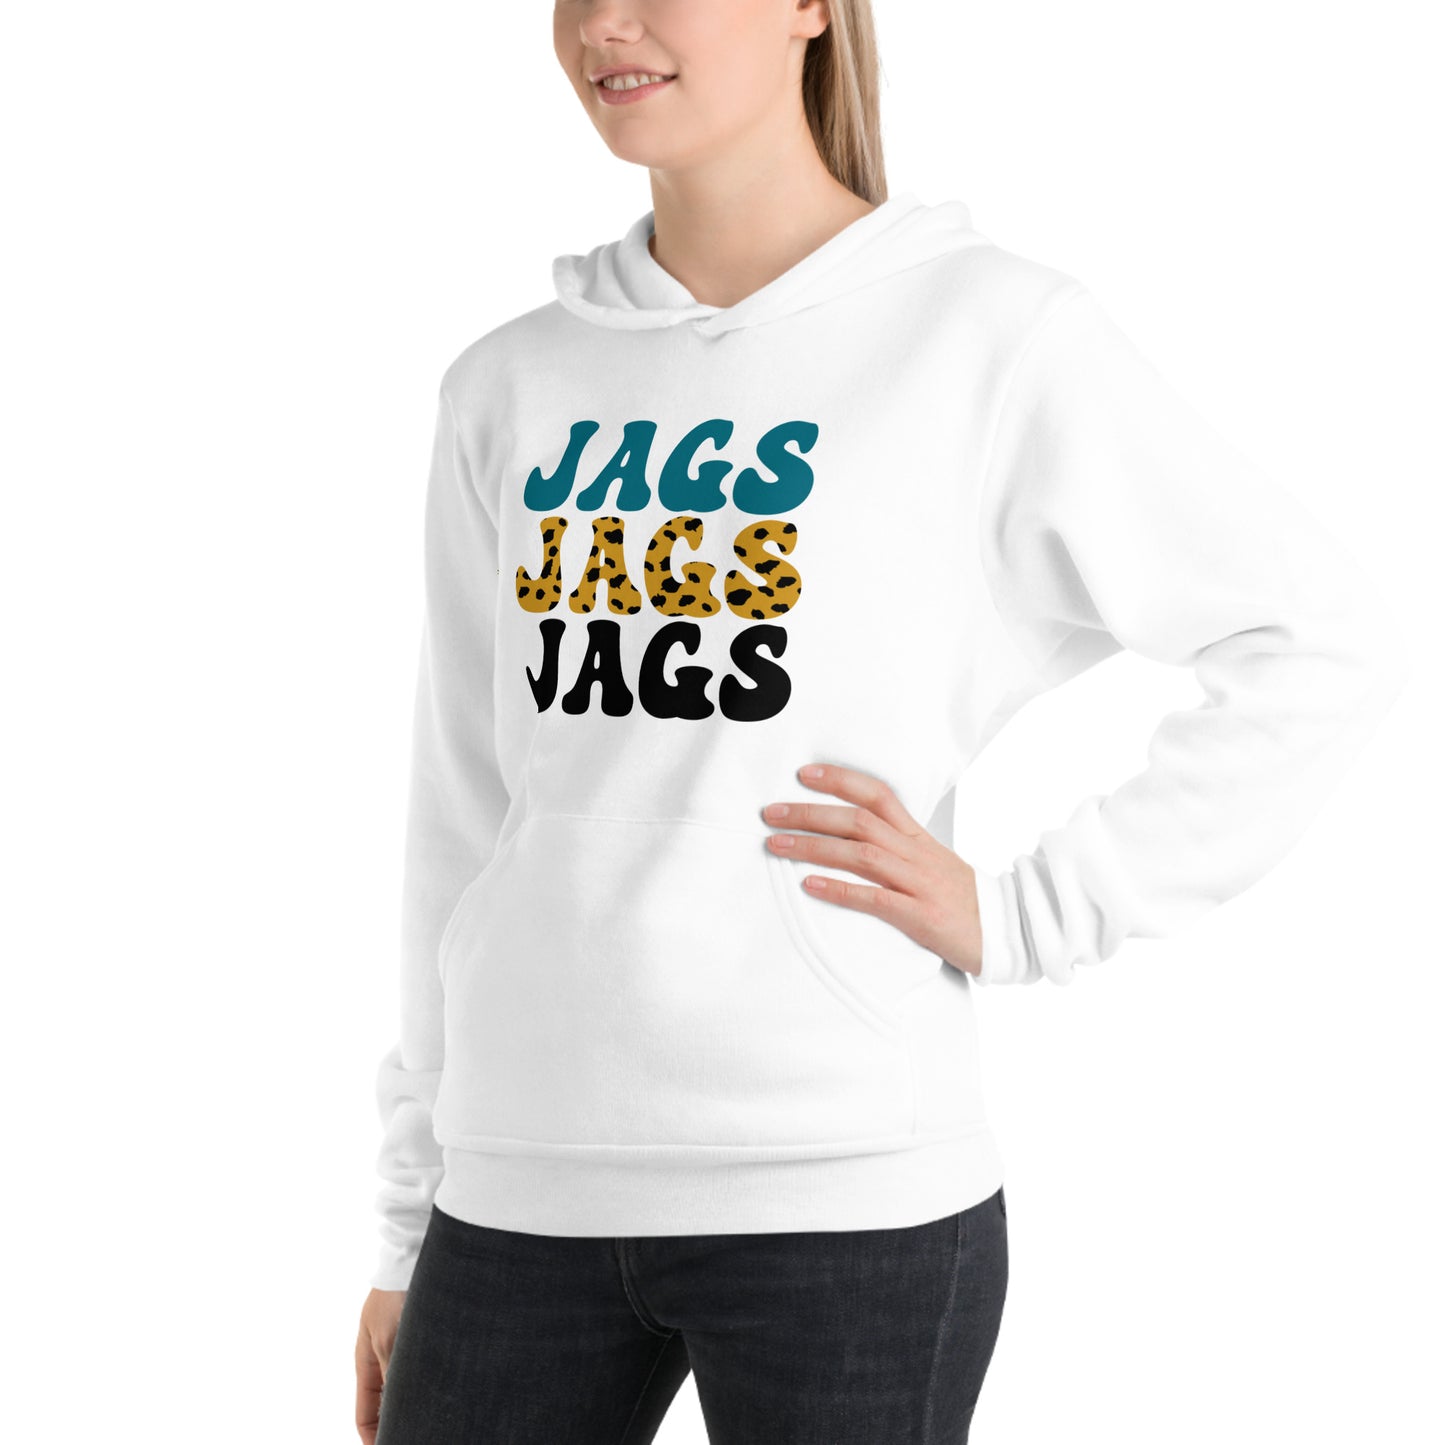 "Jags Jags Jags" Unisex hoodie (Super Soft)